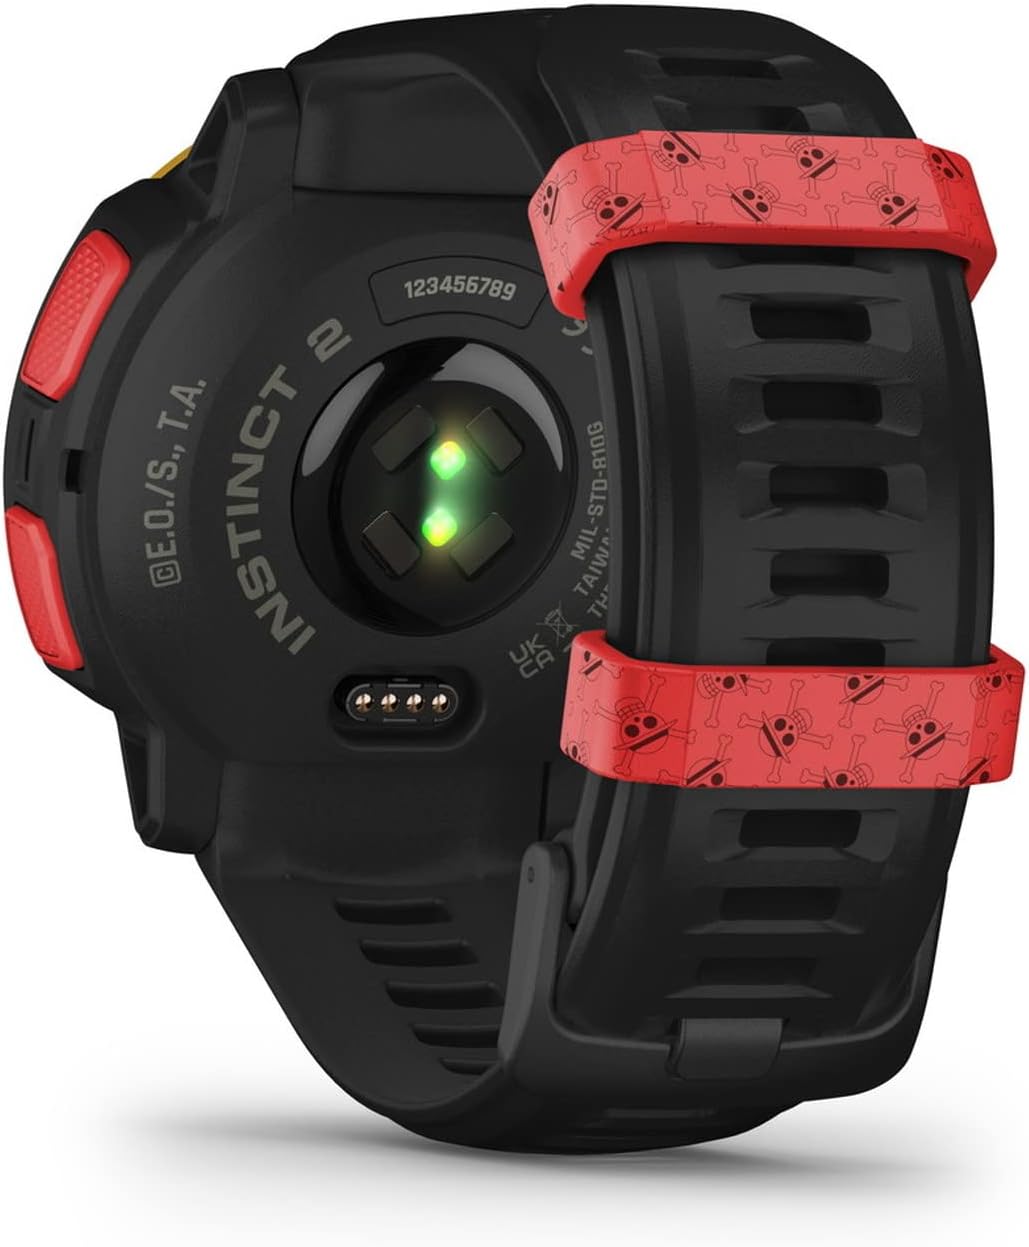 Garmin Instinct 2/2S Dual Power ONE PIECE Luffy Toughness Outdoor GPS Watch | animota